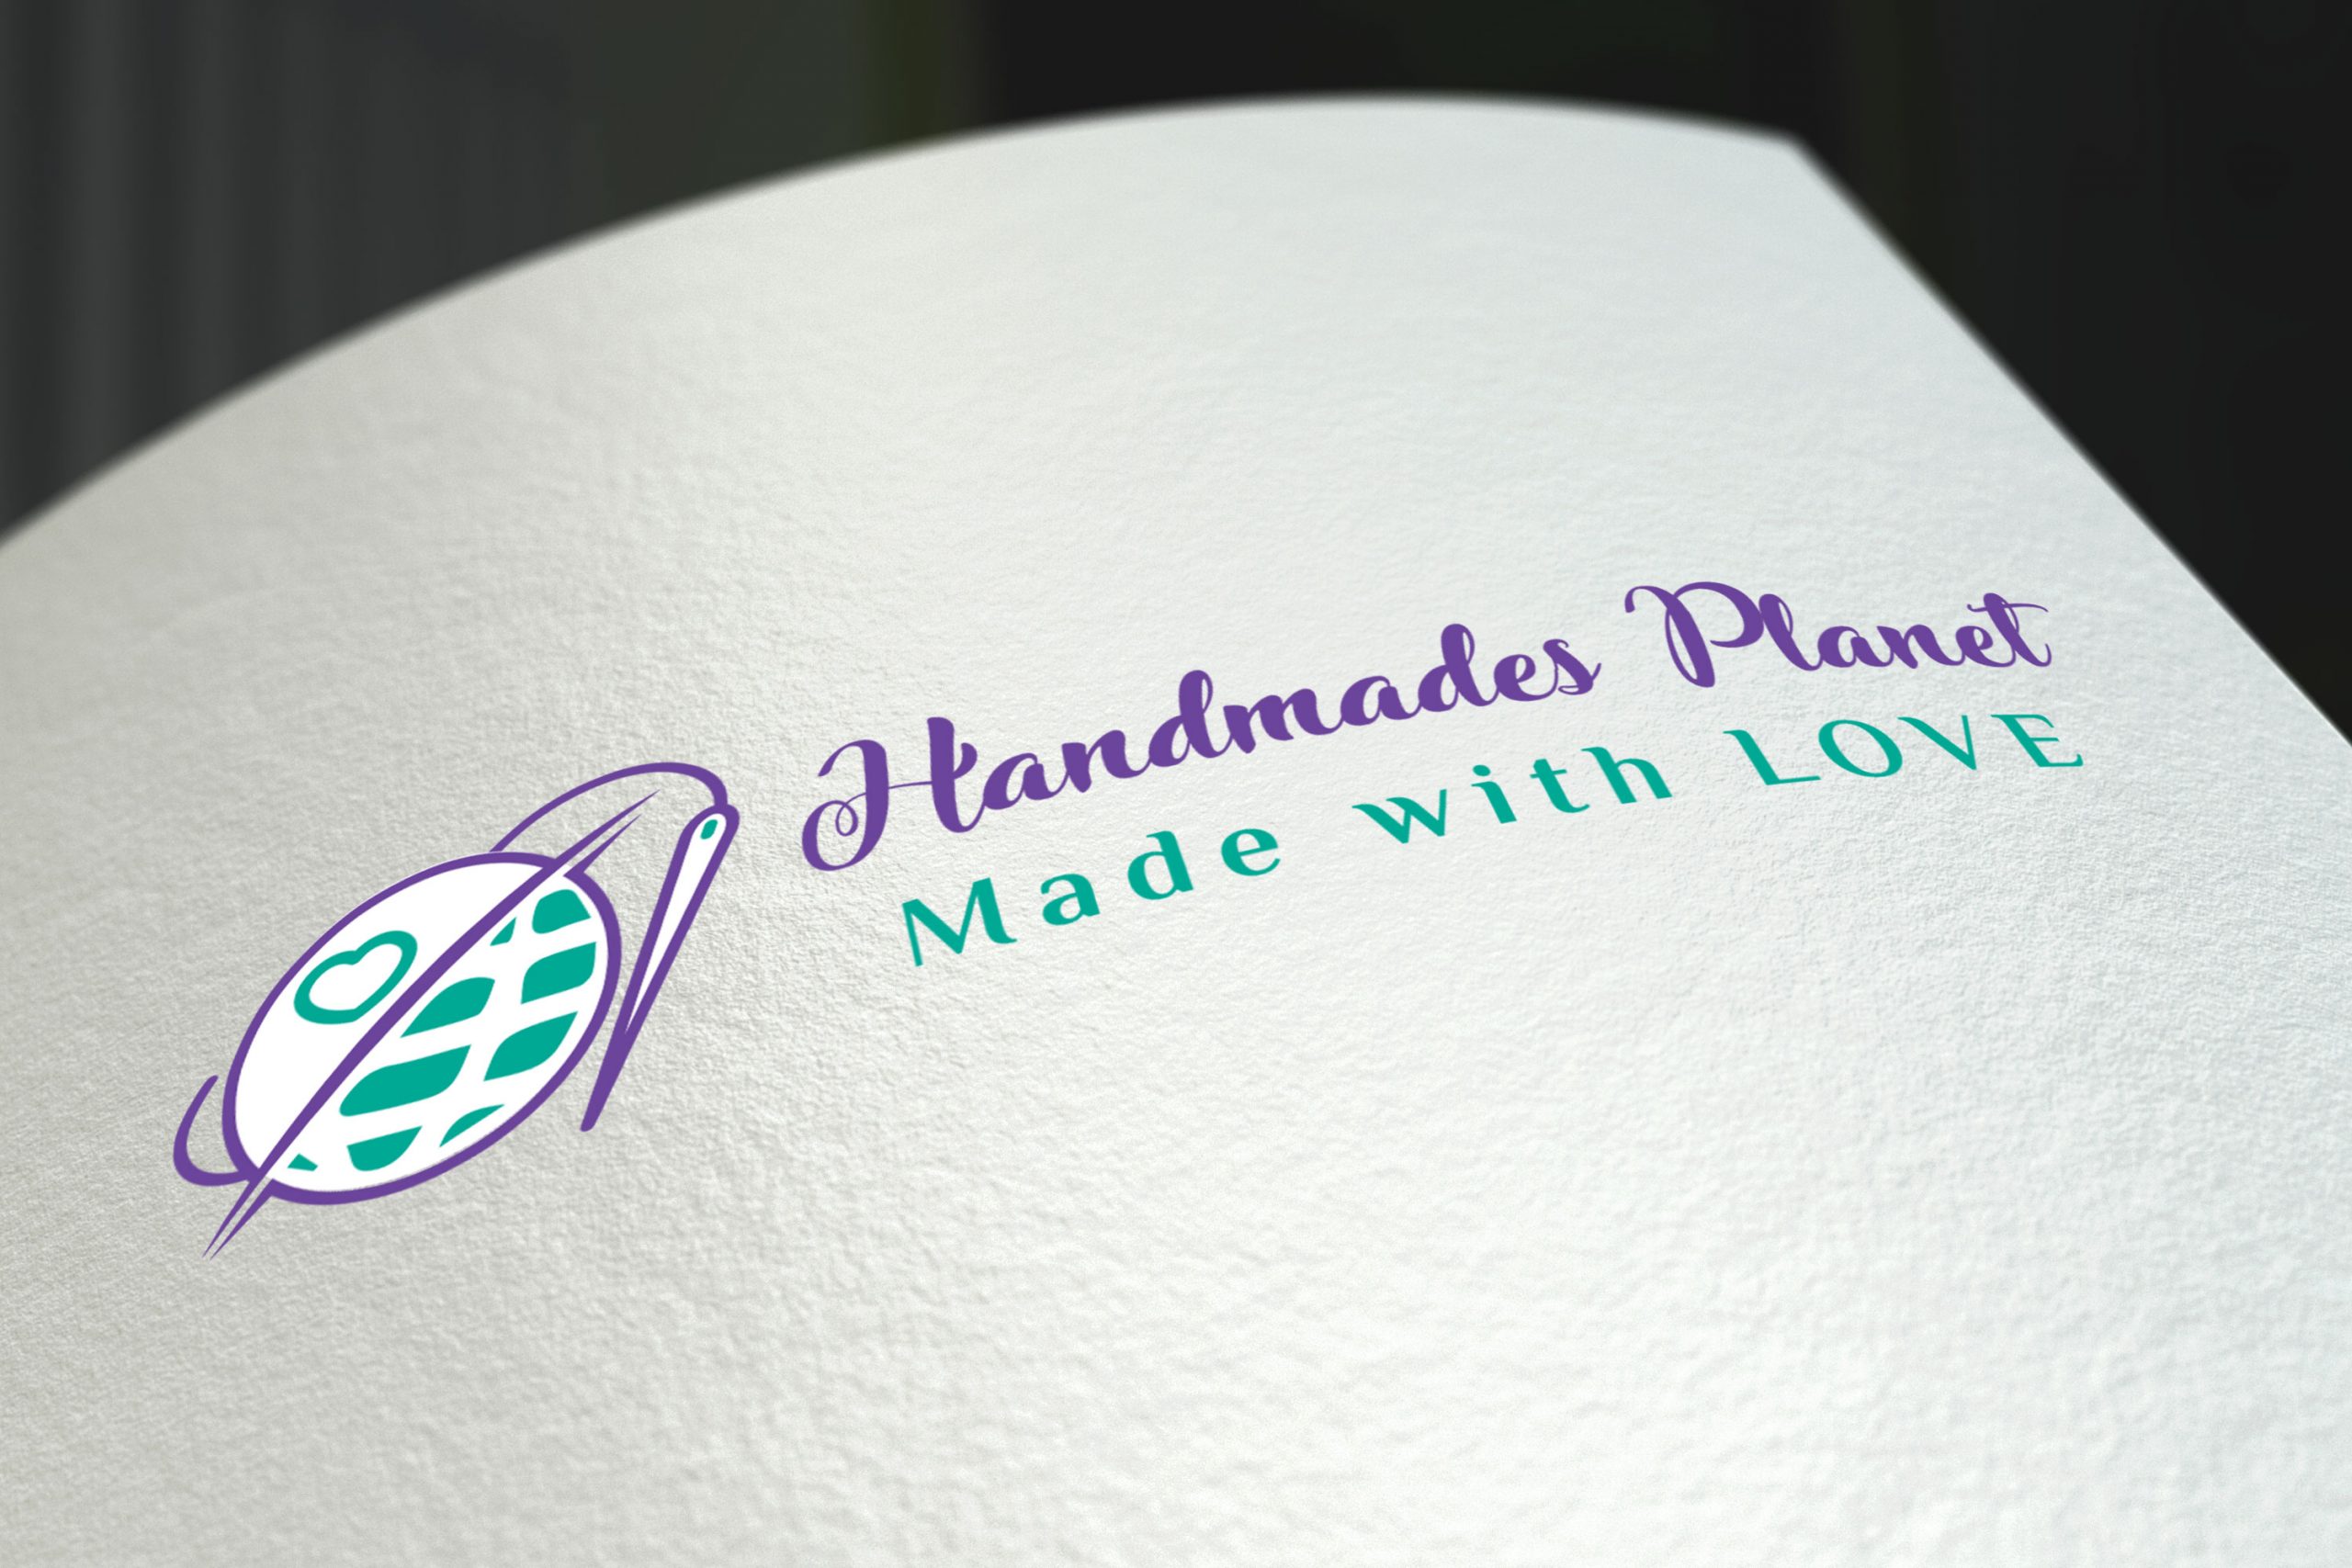 Handmades Planet logo